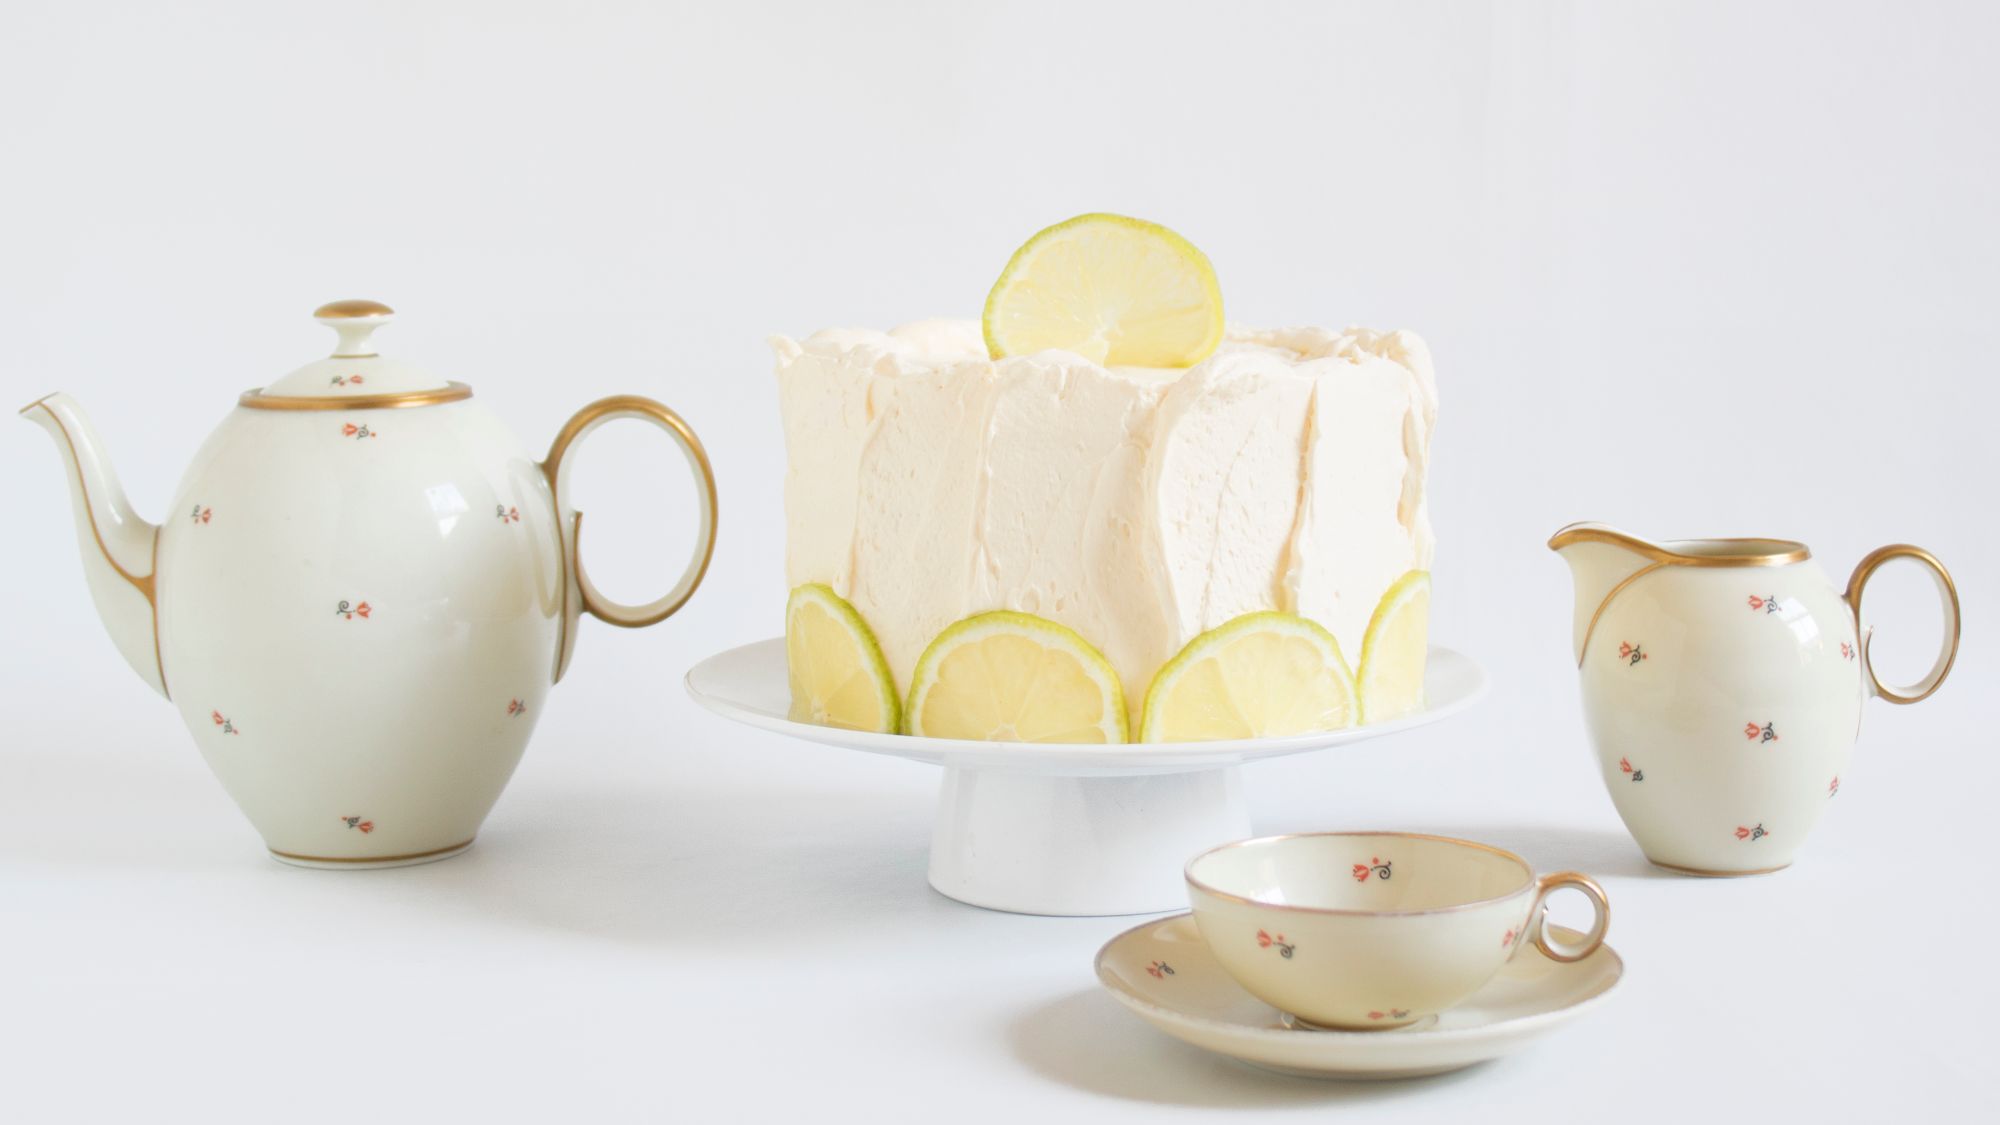 Lemon Cake wth lemon slices decorations